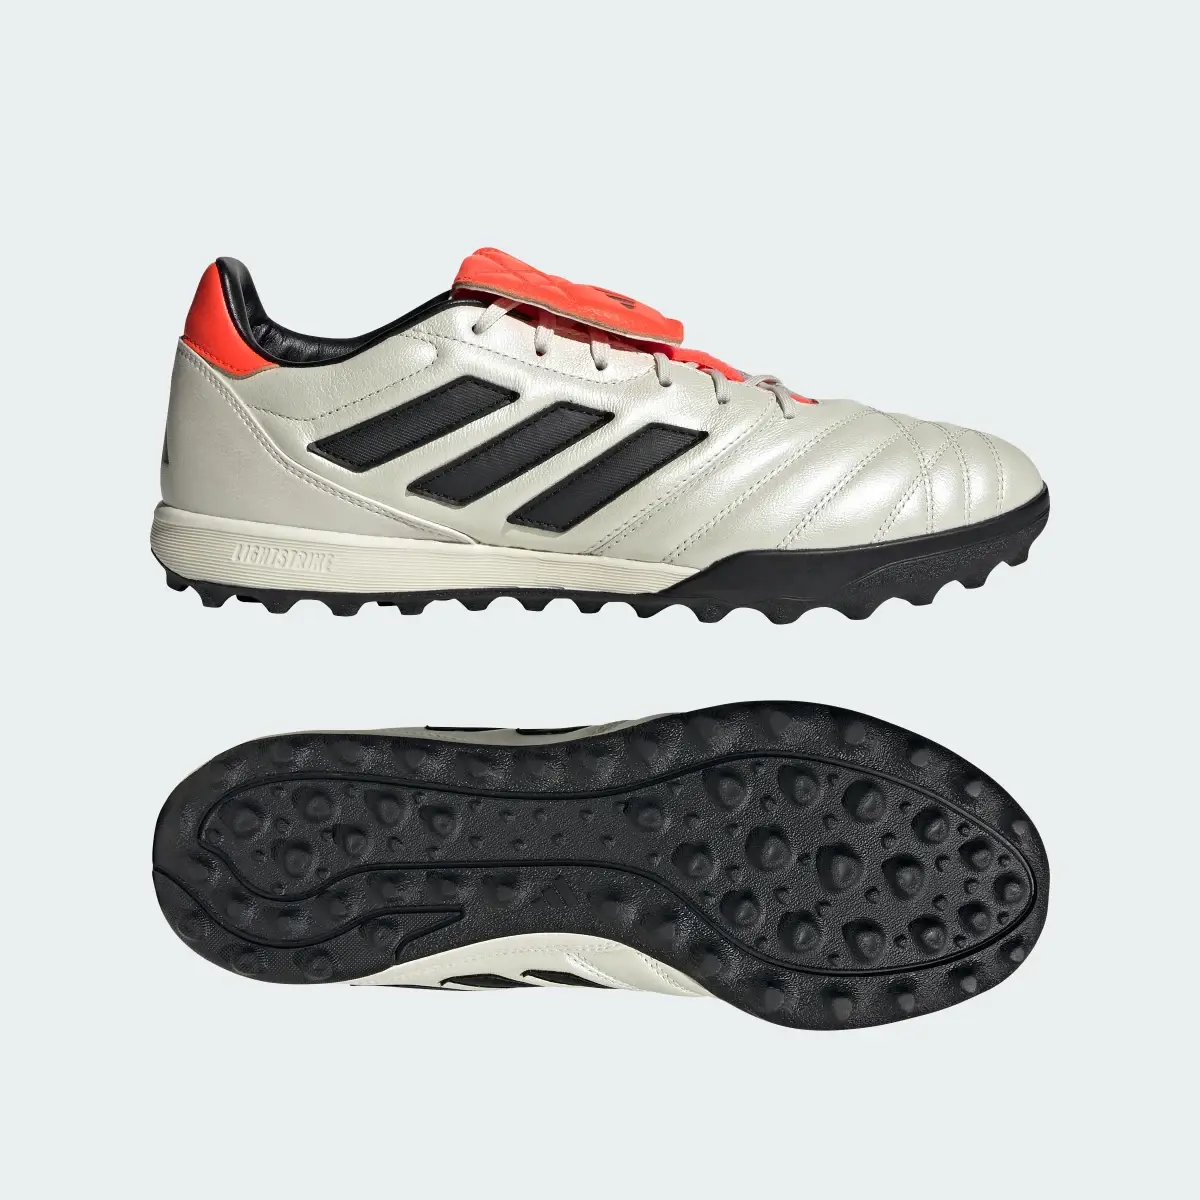 Adidas Copa Gloro Turf Boots. 1